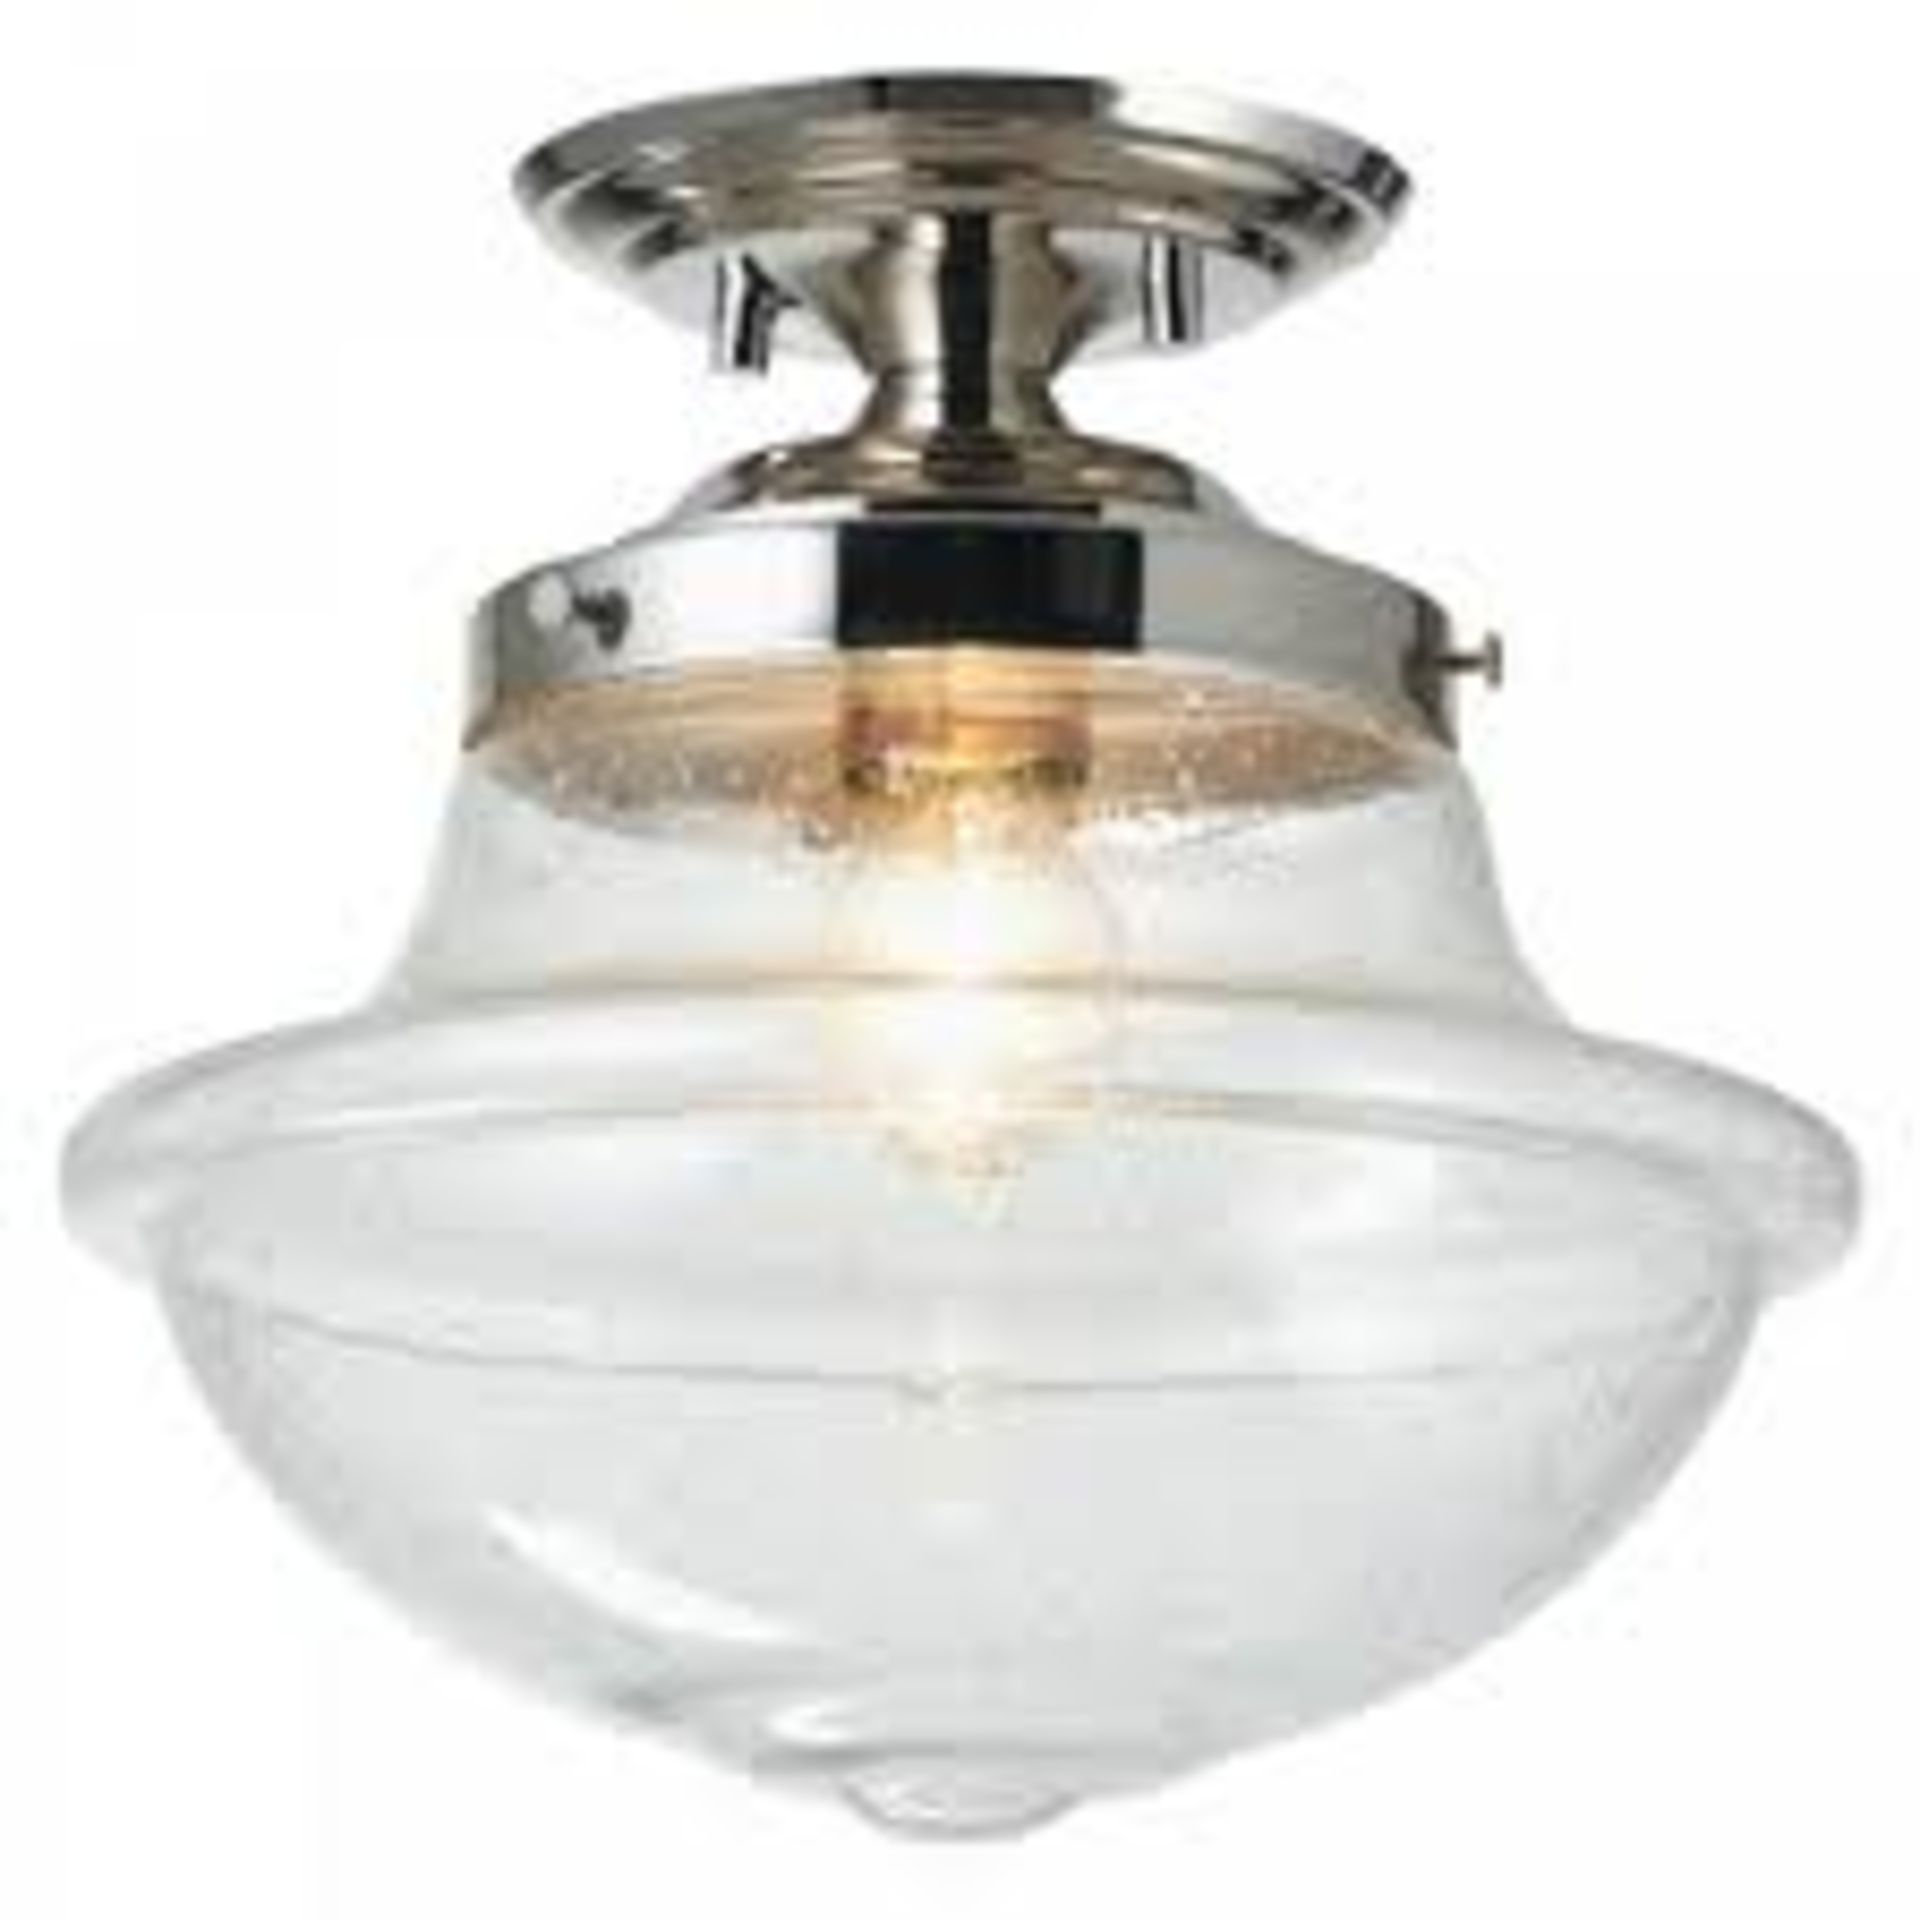 Boxed Oaks Lighting 1 Light Semi Flush Ceiling Light RRP £75 (15334) (Public Viewing and